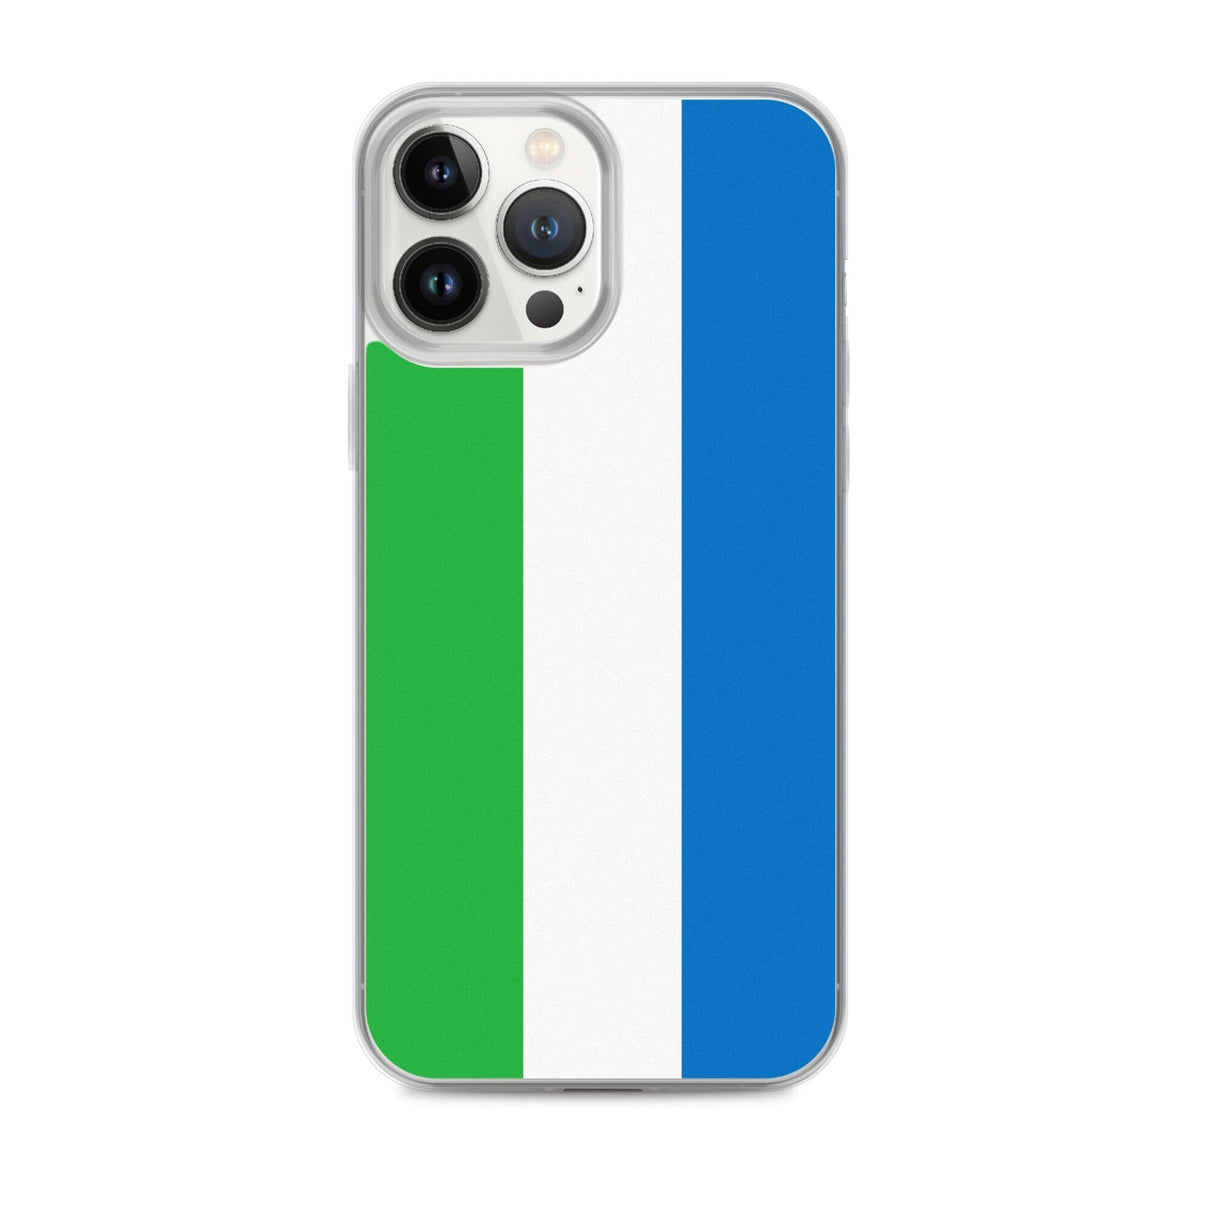 Sierra Leone Flag iPhone Case - Pixelforma